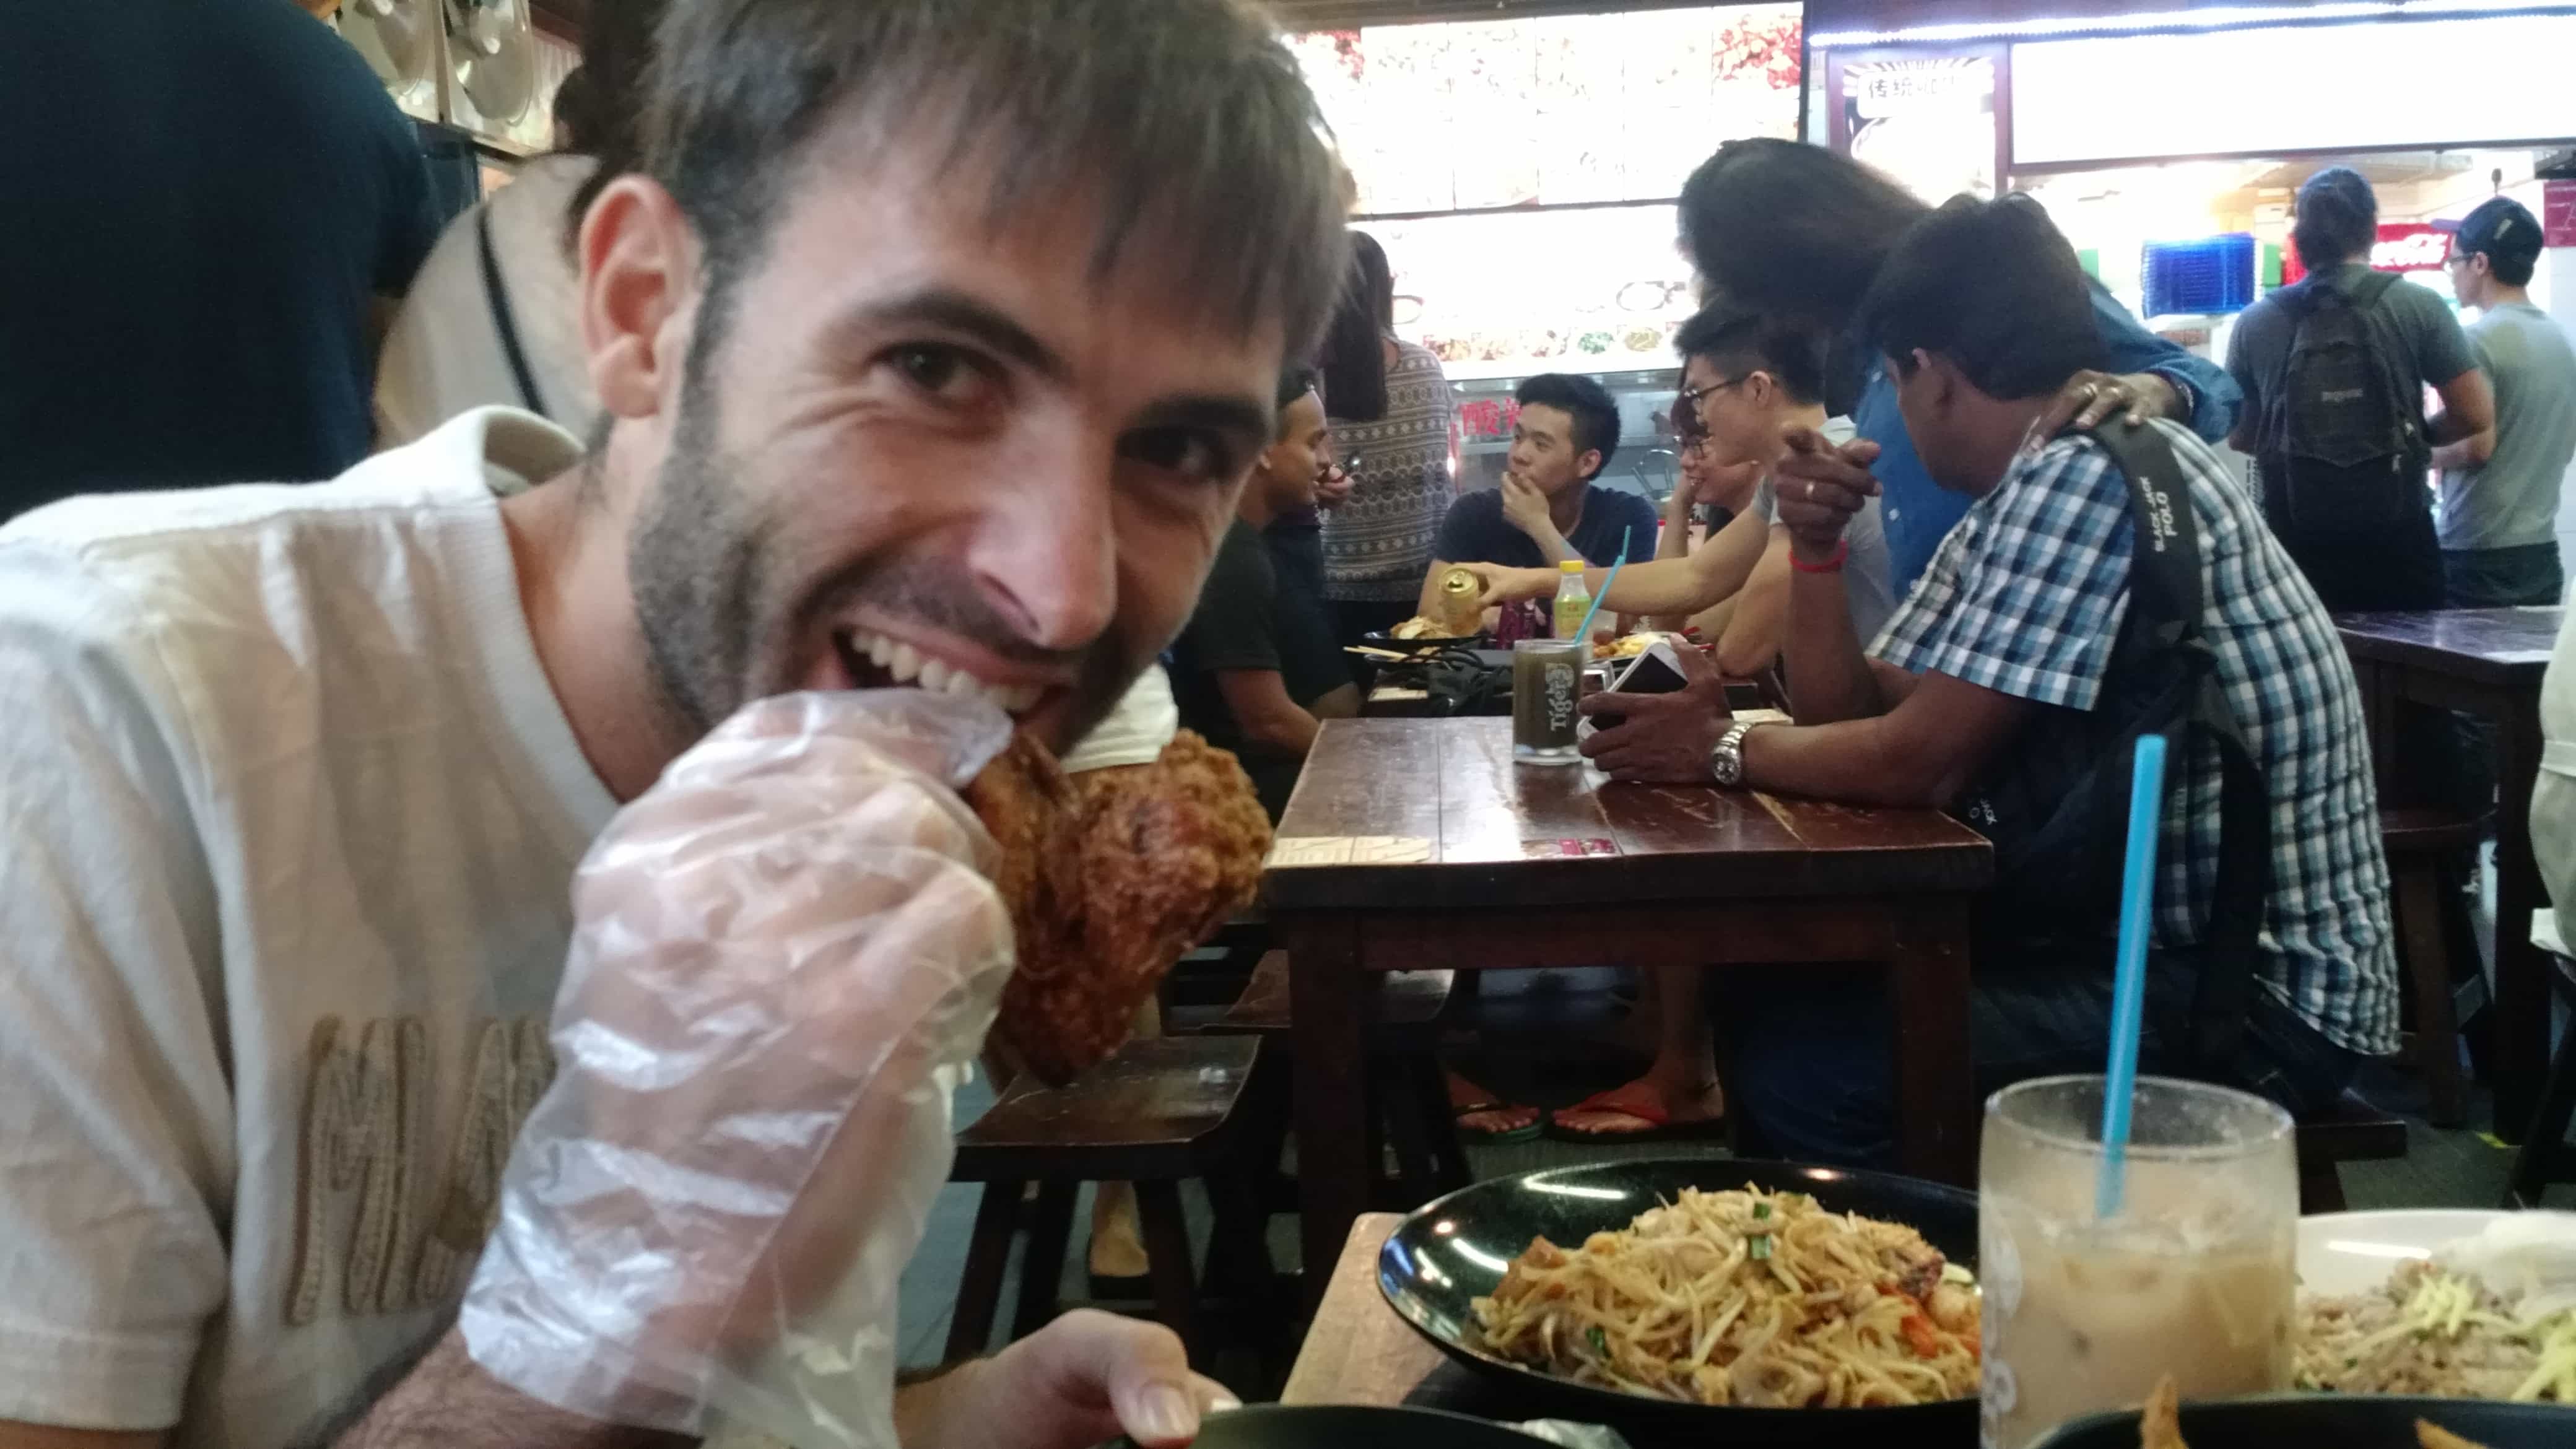 Travel Singapore, eating chicken.